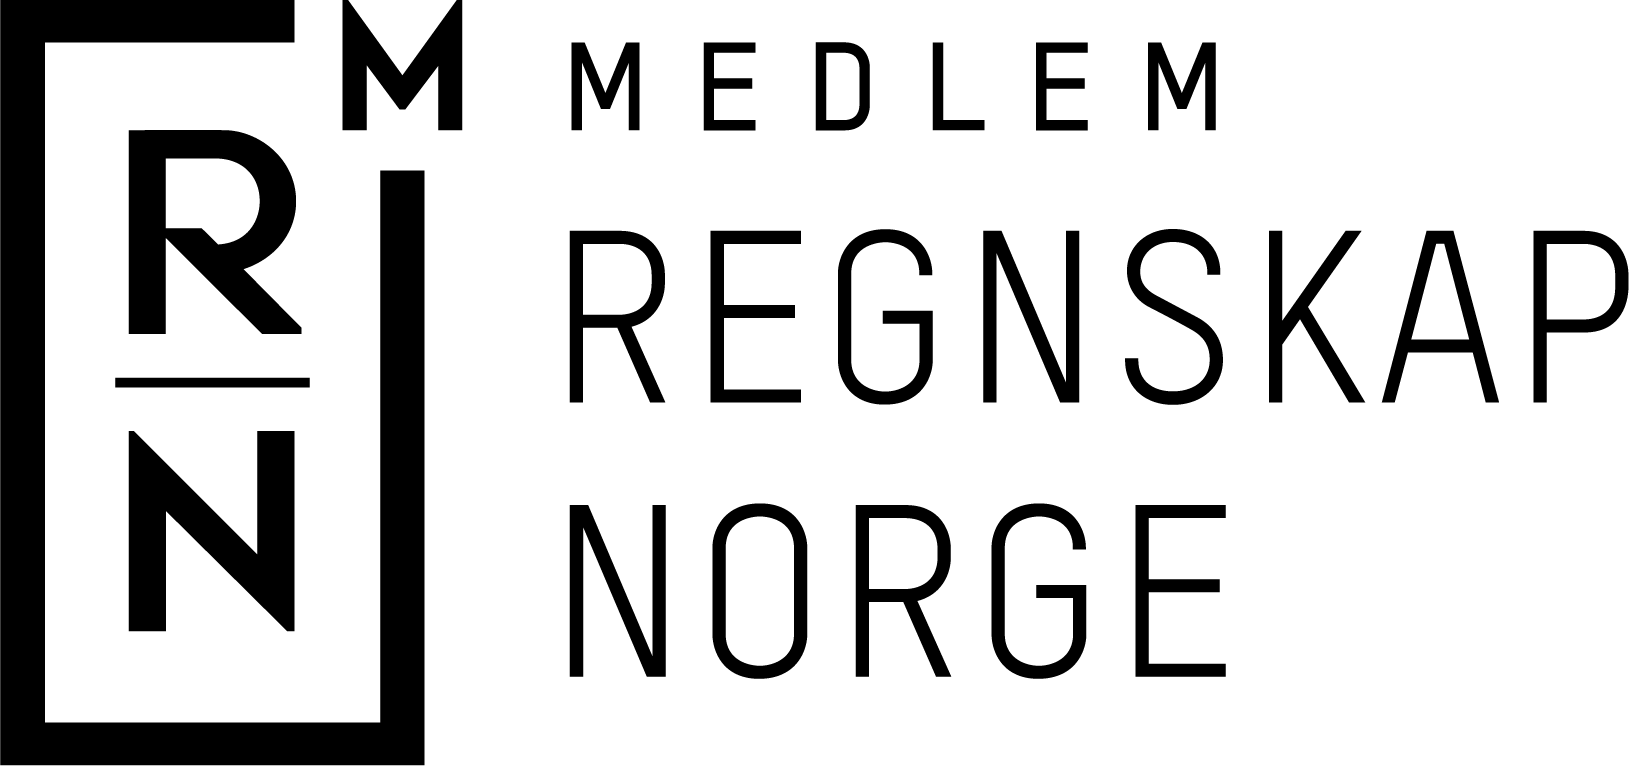 Medlem av Regnskap Norge - logo